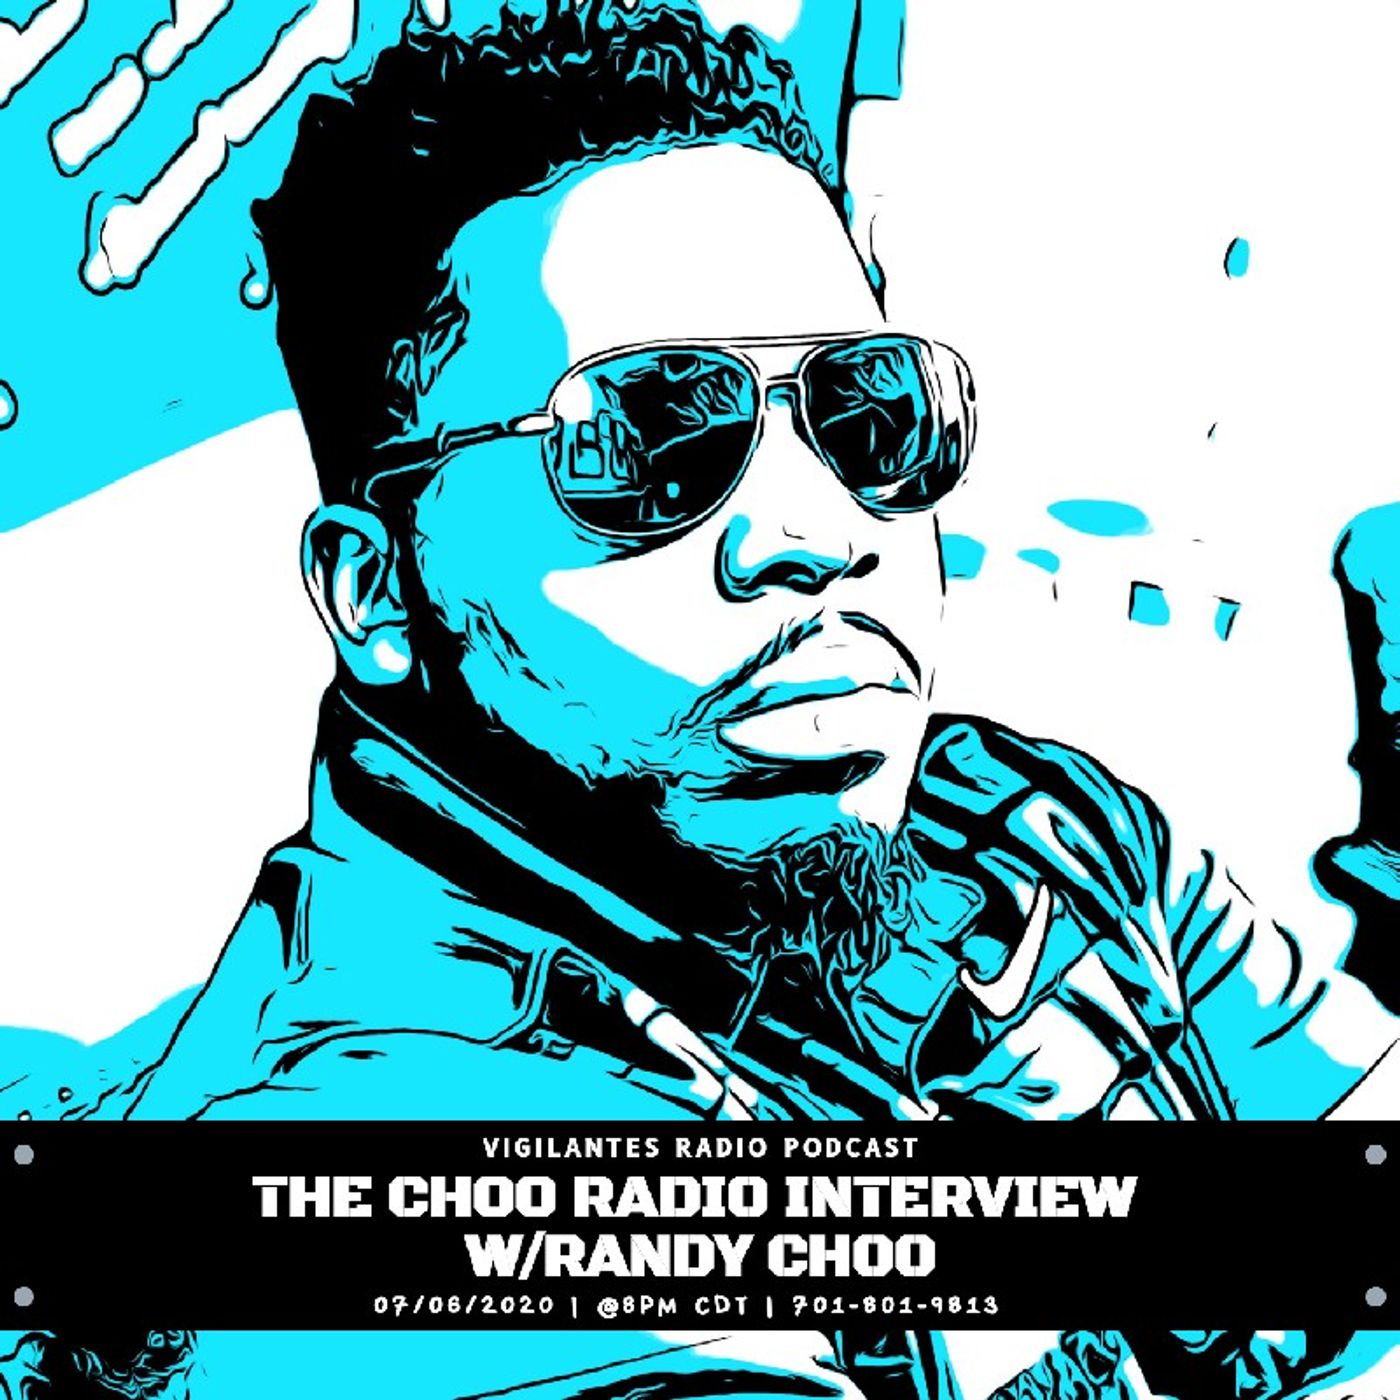 The Choo Radio Interview w/Randy Choo. Image